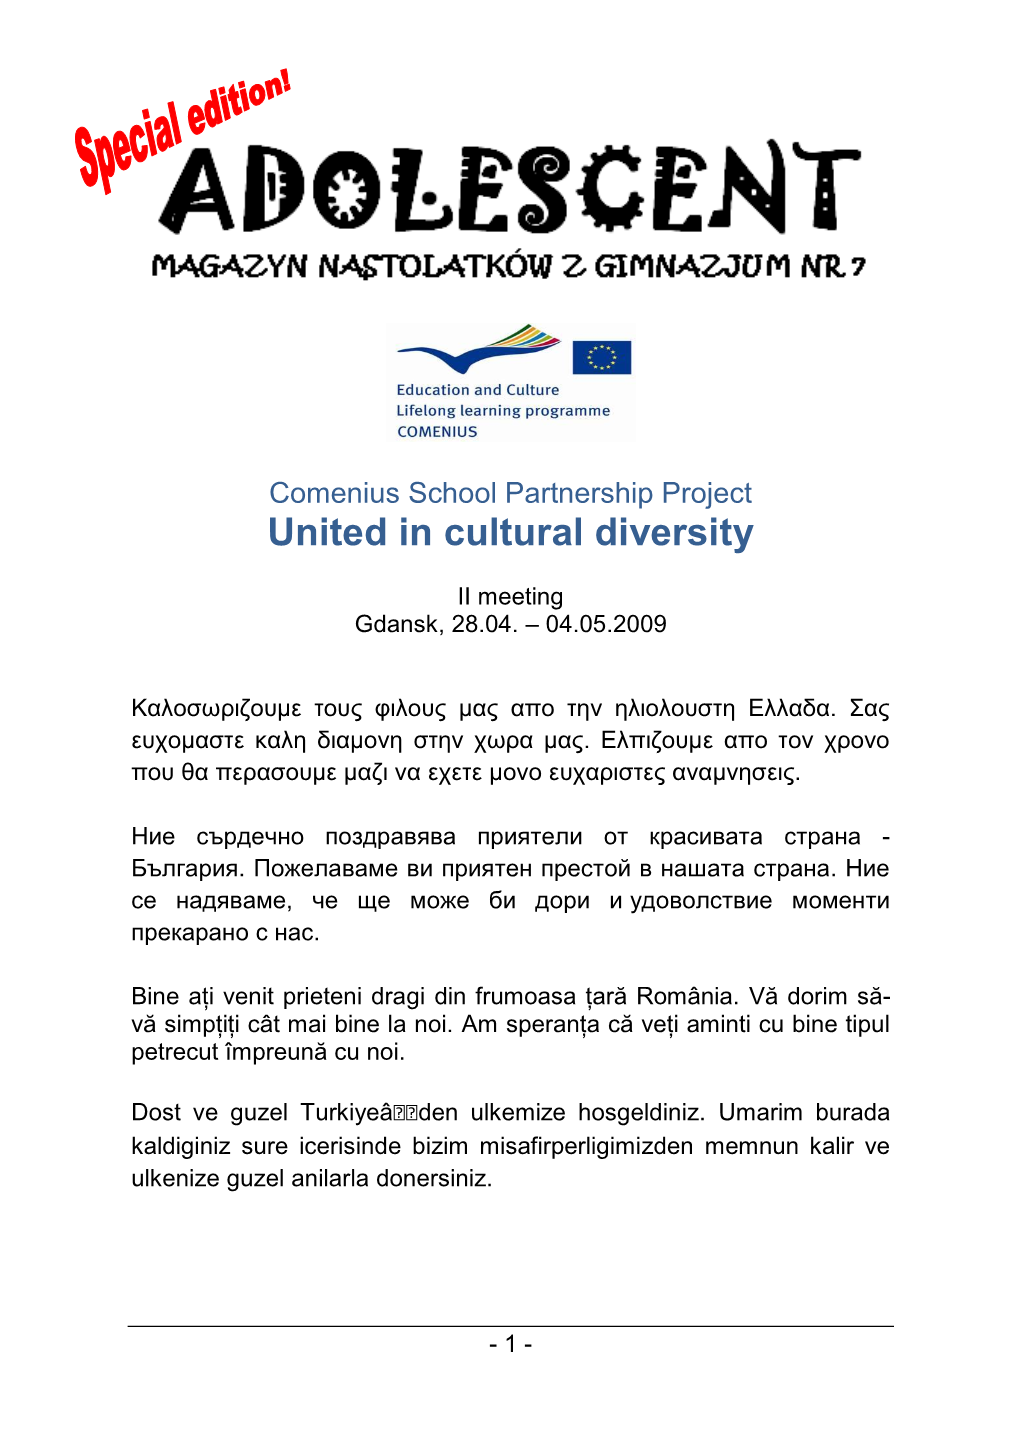 United in Cultural Diversity